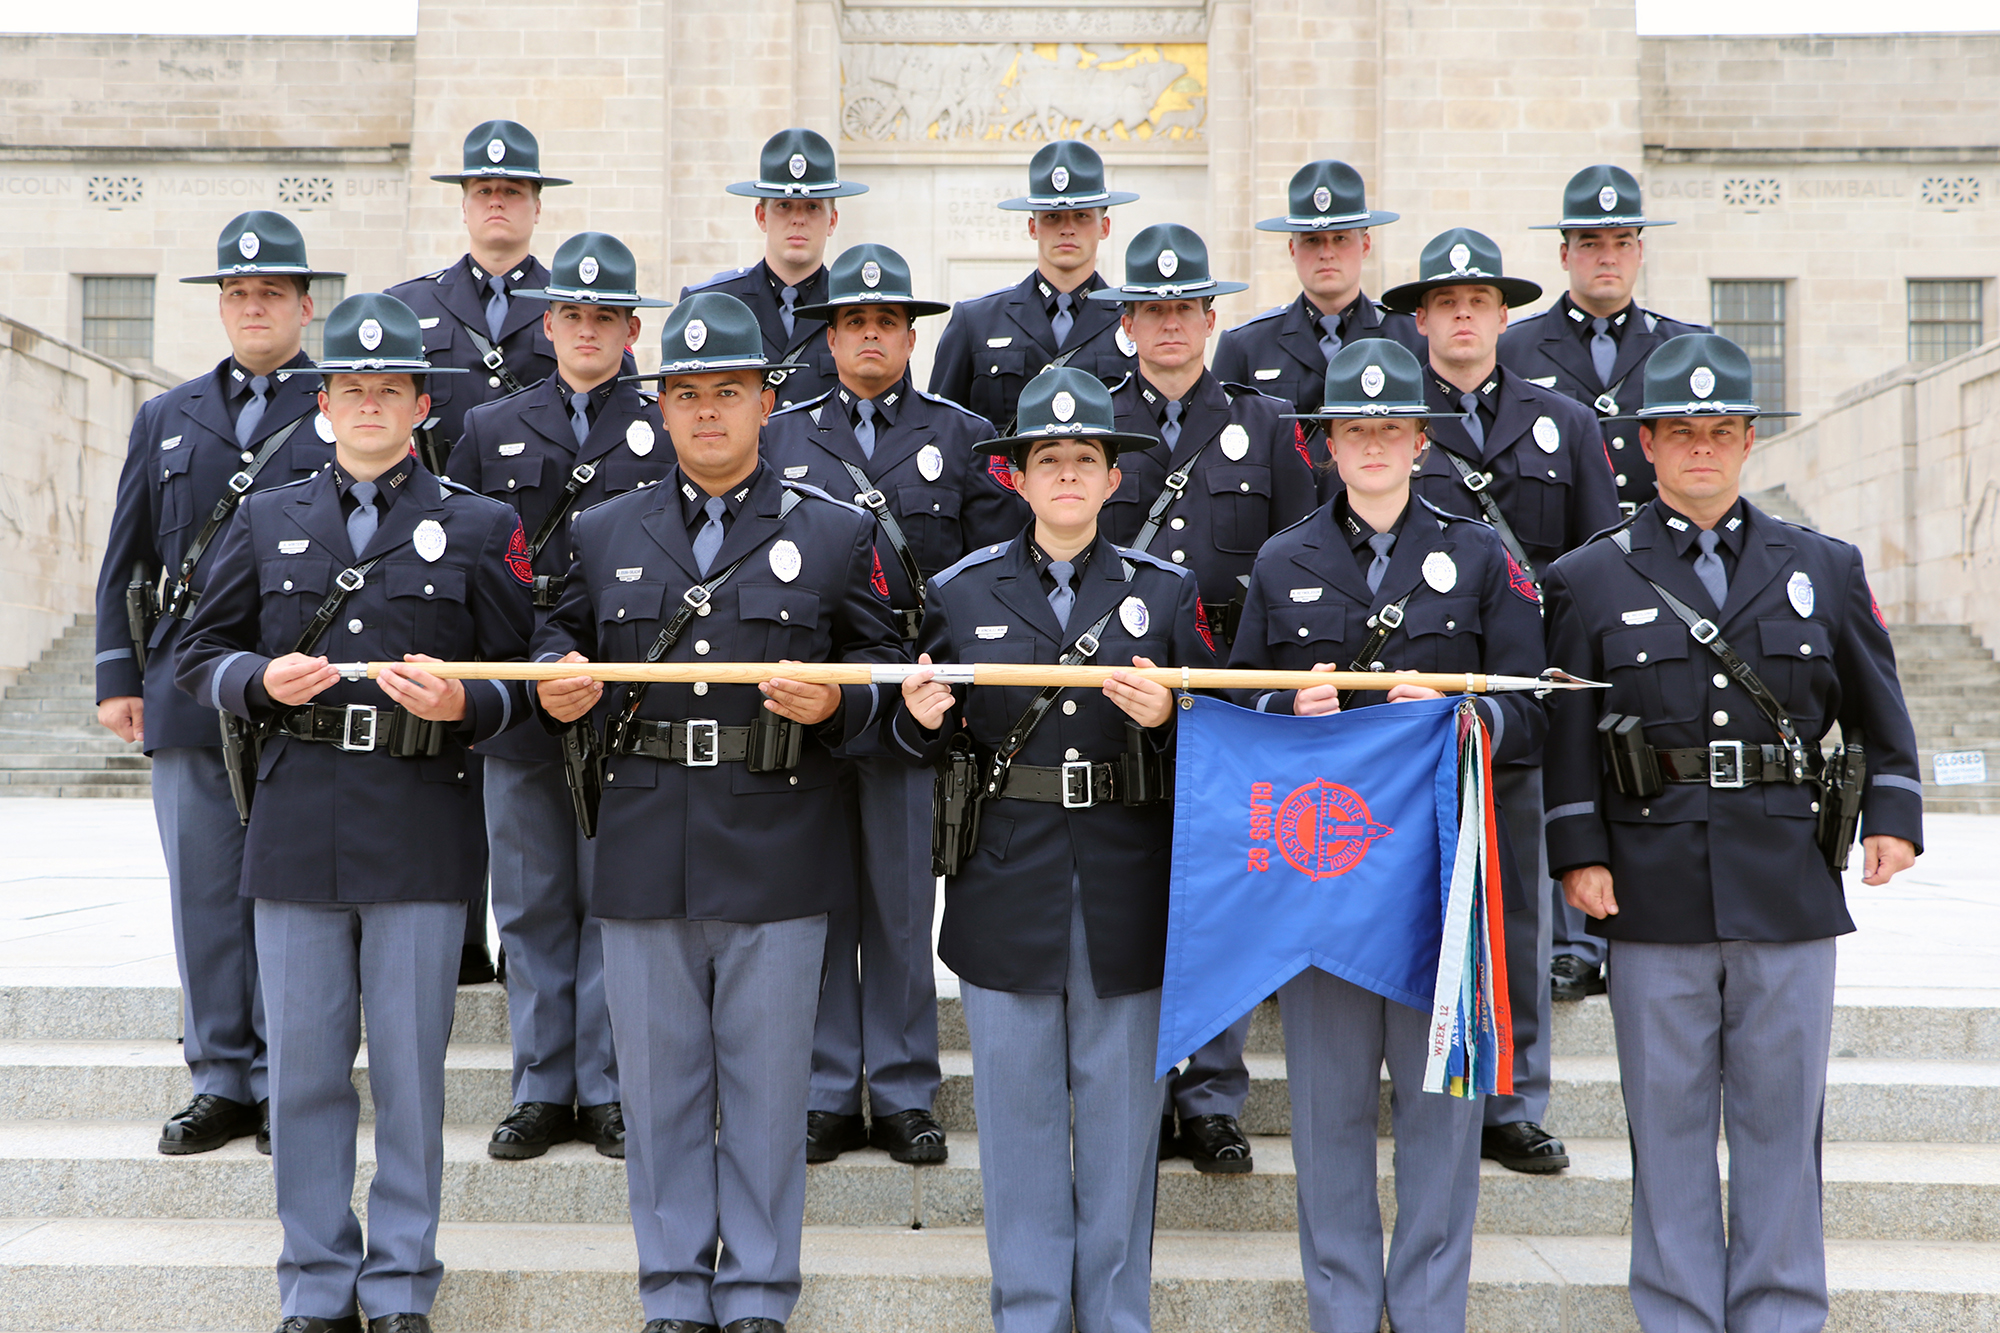 Nebraska State Patrol Graduates 62nd Recruit Class